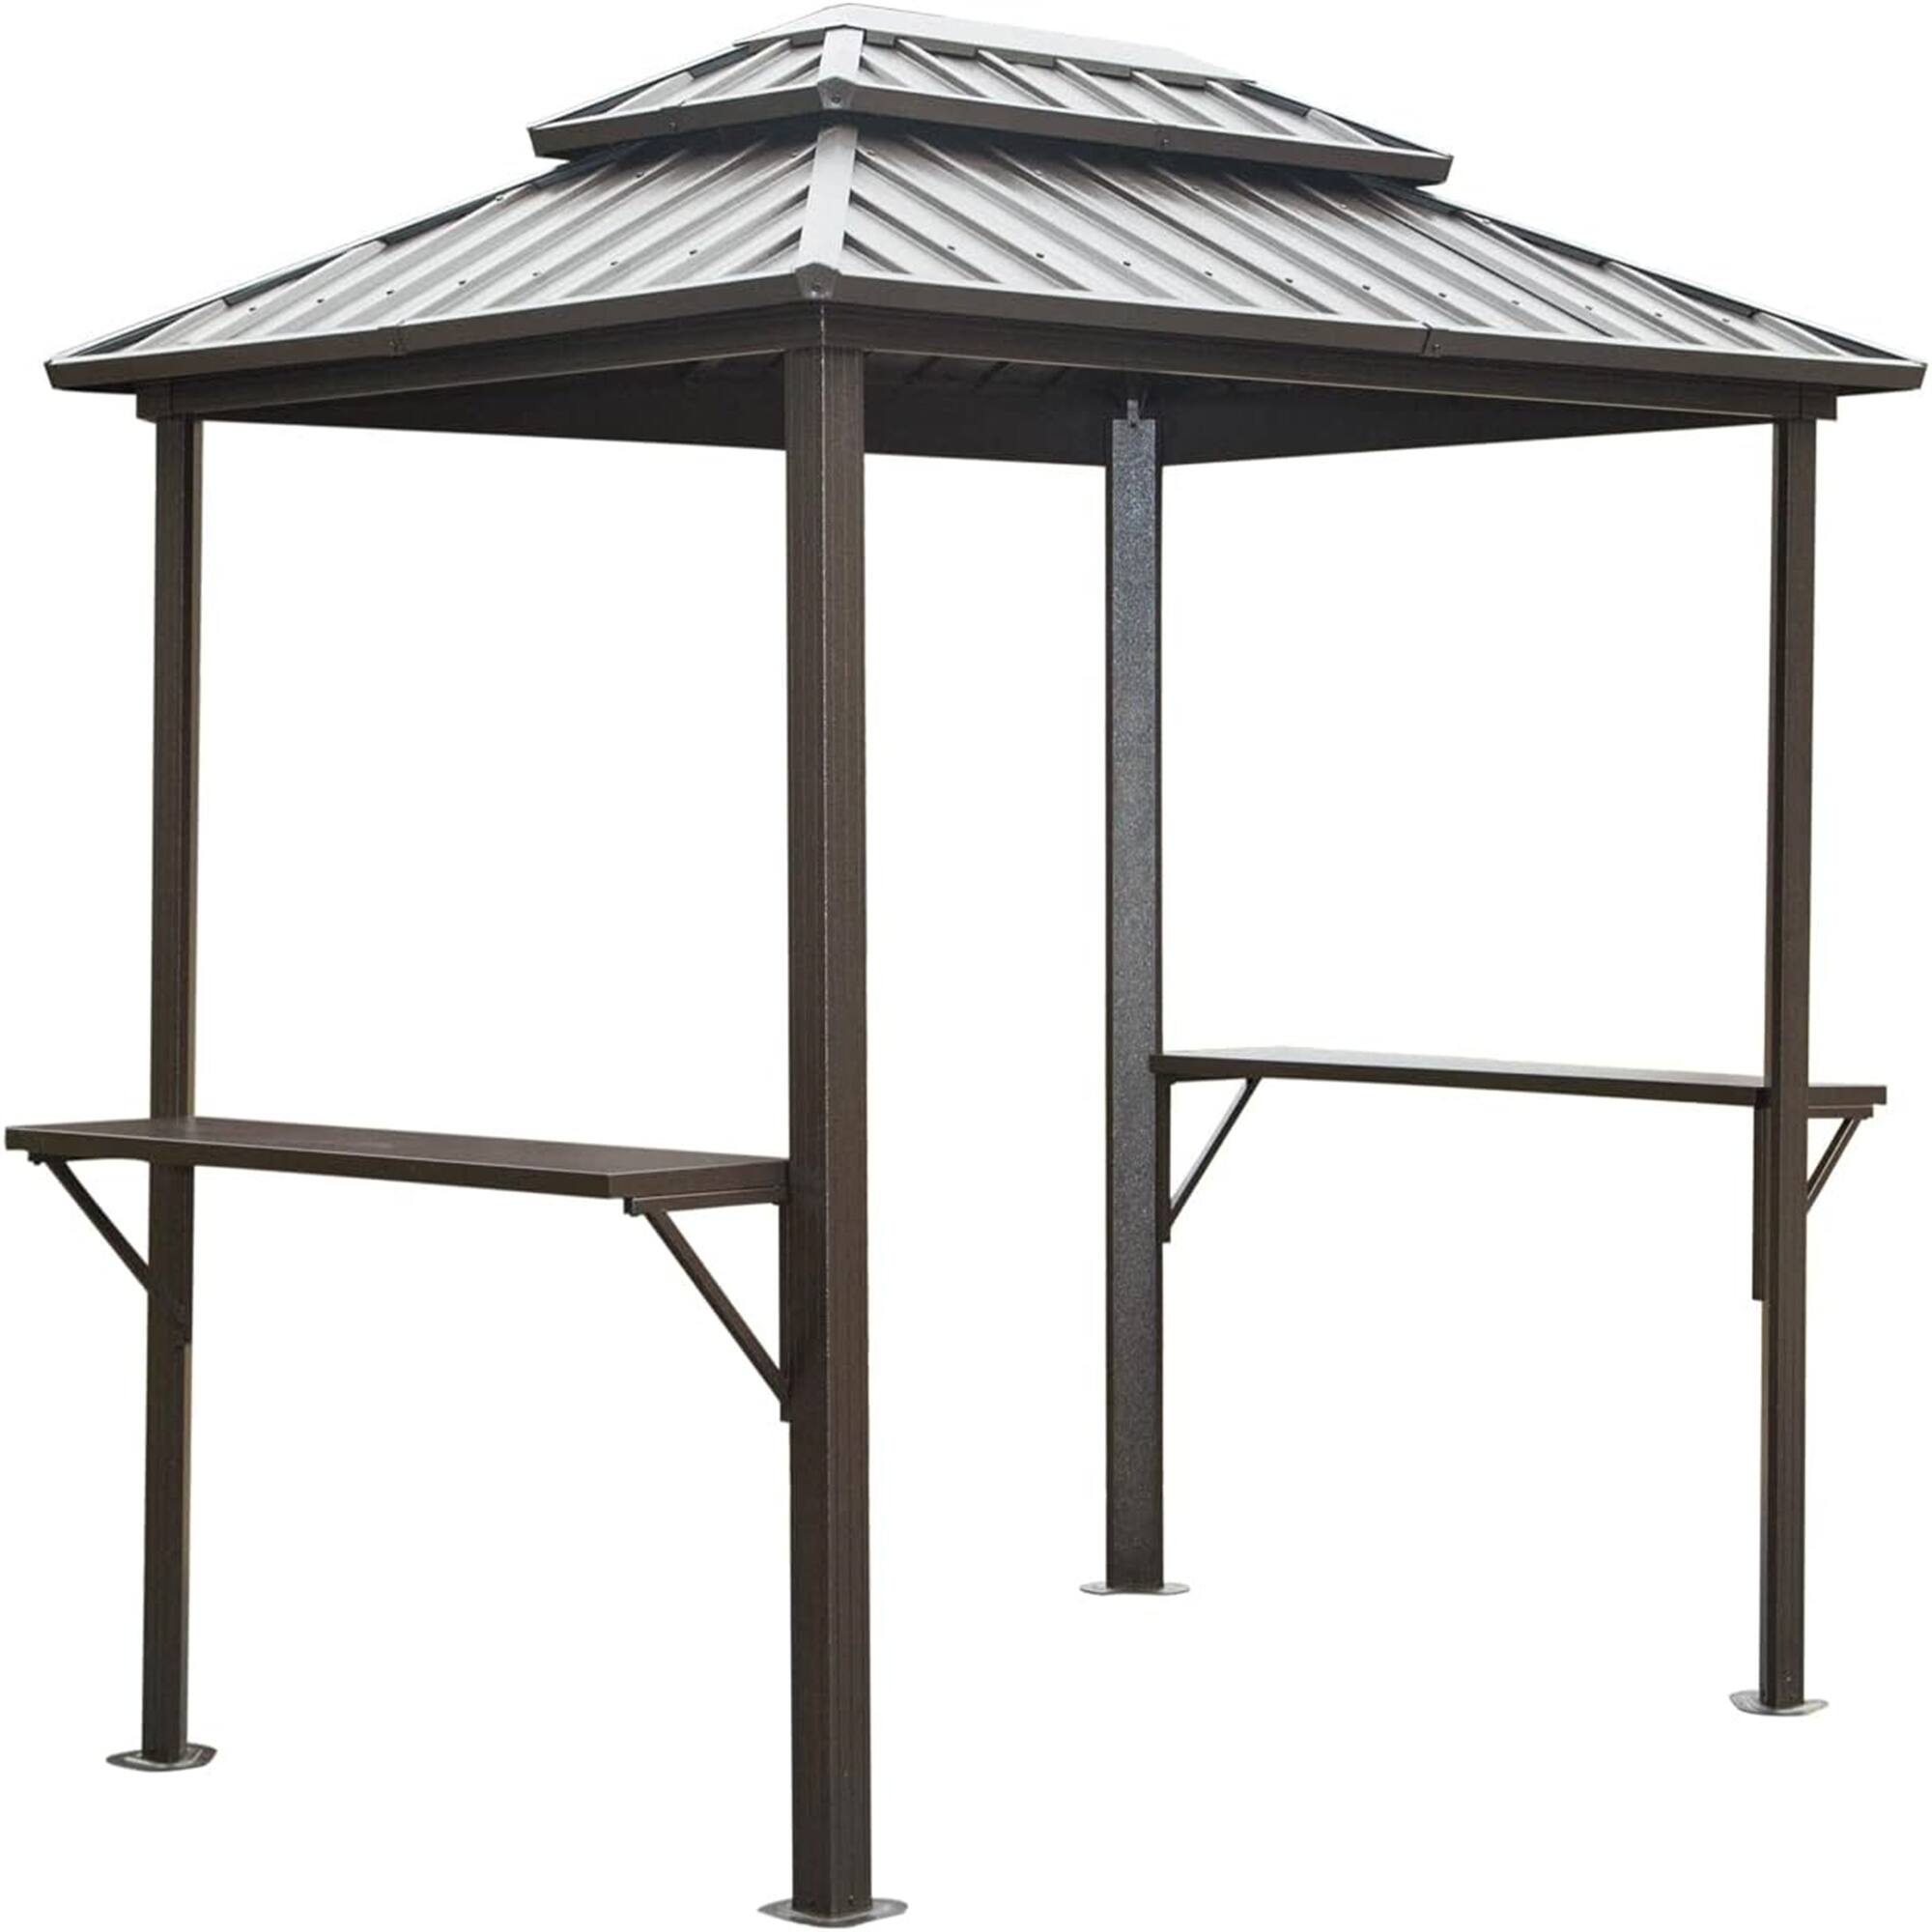 8'×6' Outdoor Metal Fram Aluminum BBQ Gazebo with Shelves Serving Tables - Grey